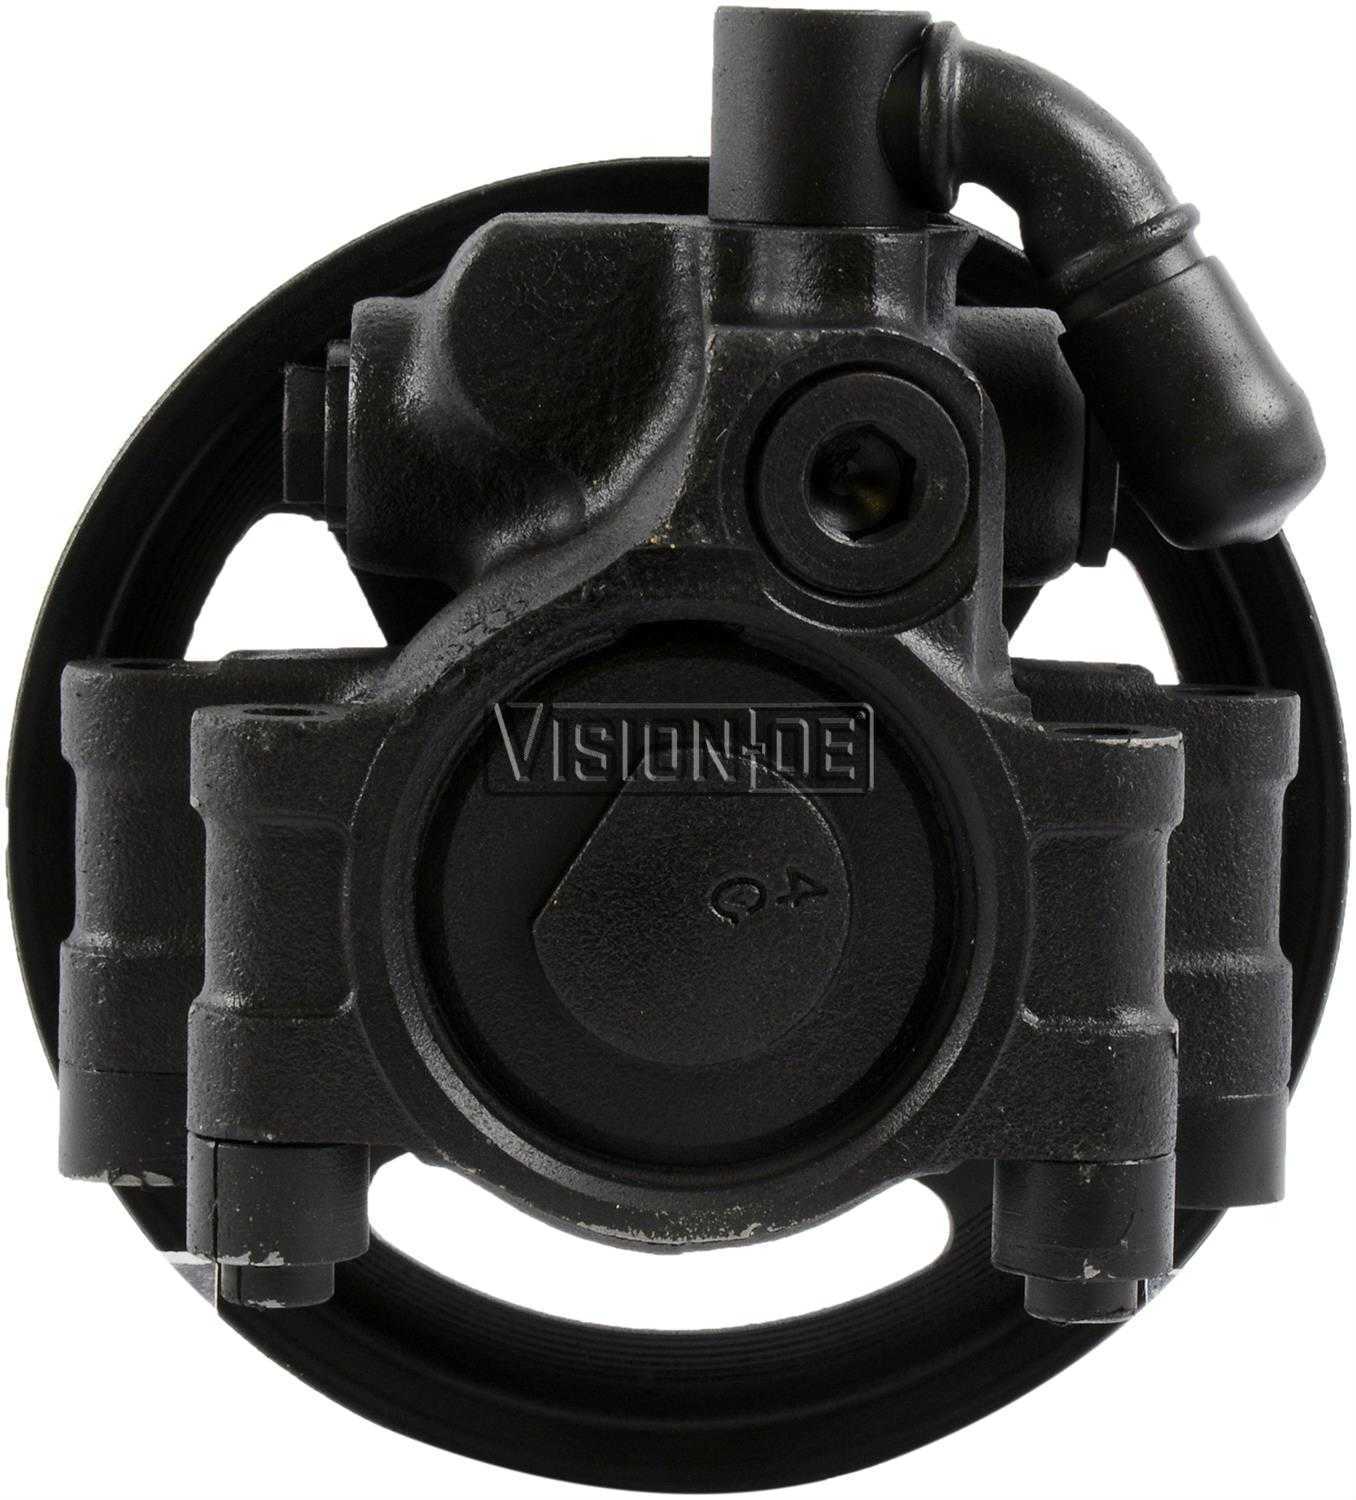 VISION-OE - Reman Power Steering Pump - VOE 712-0122A1